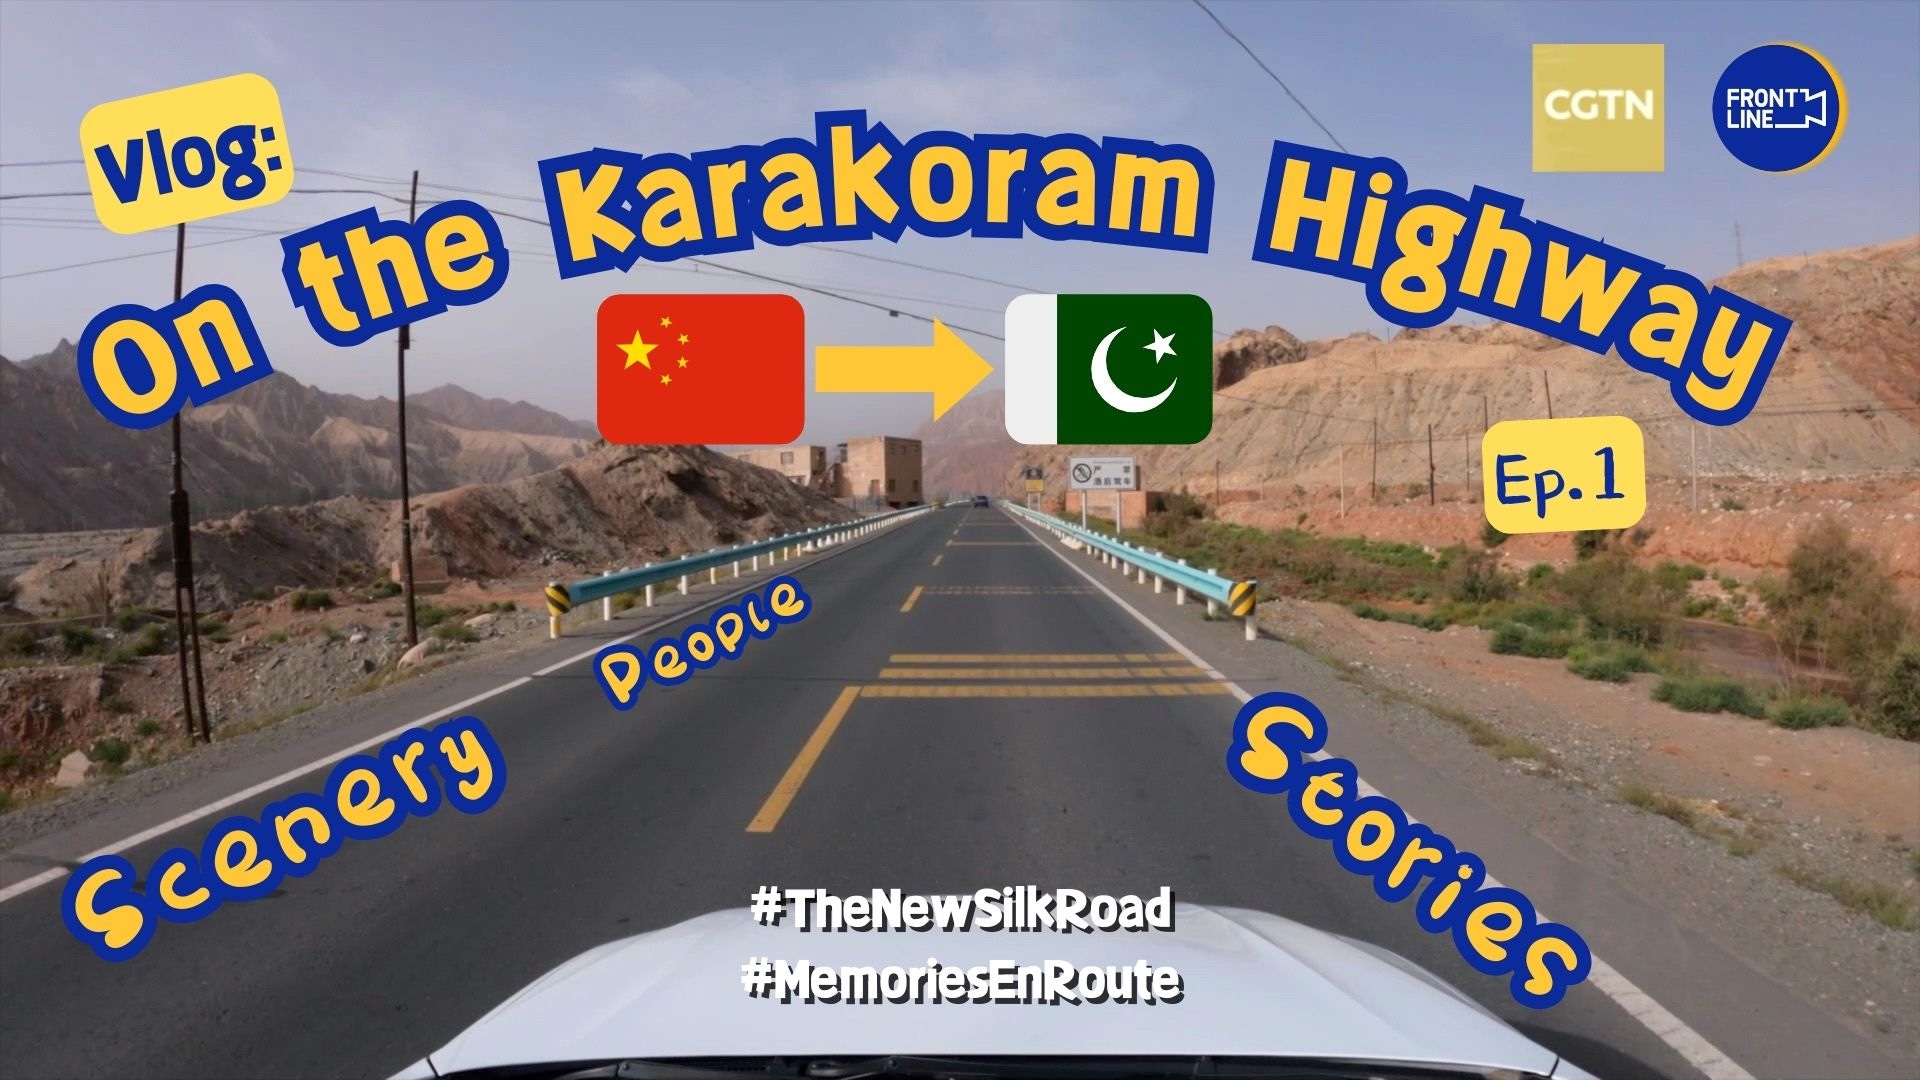 To Pakistan! On the Karakoram Highway Ep. 1